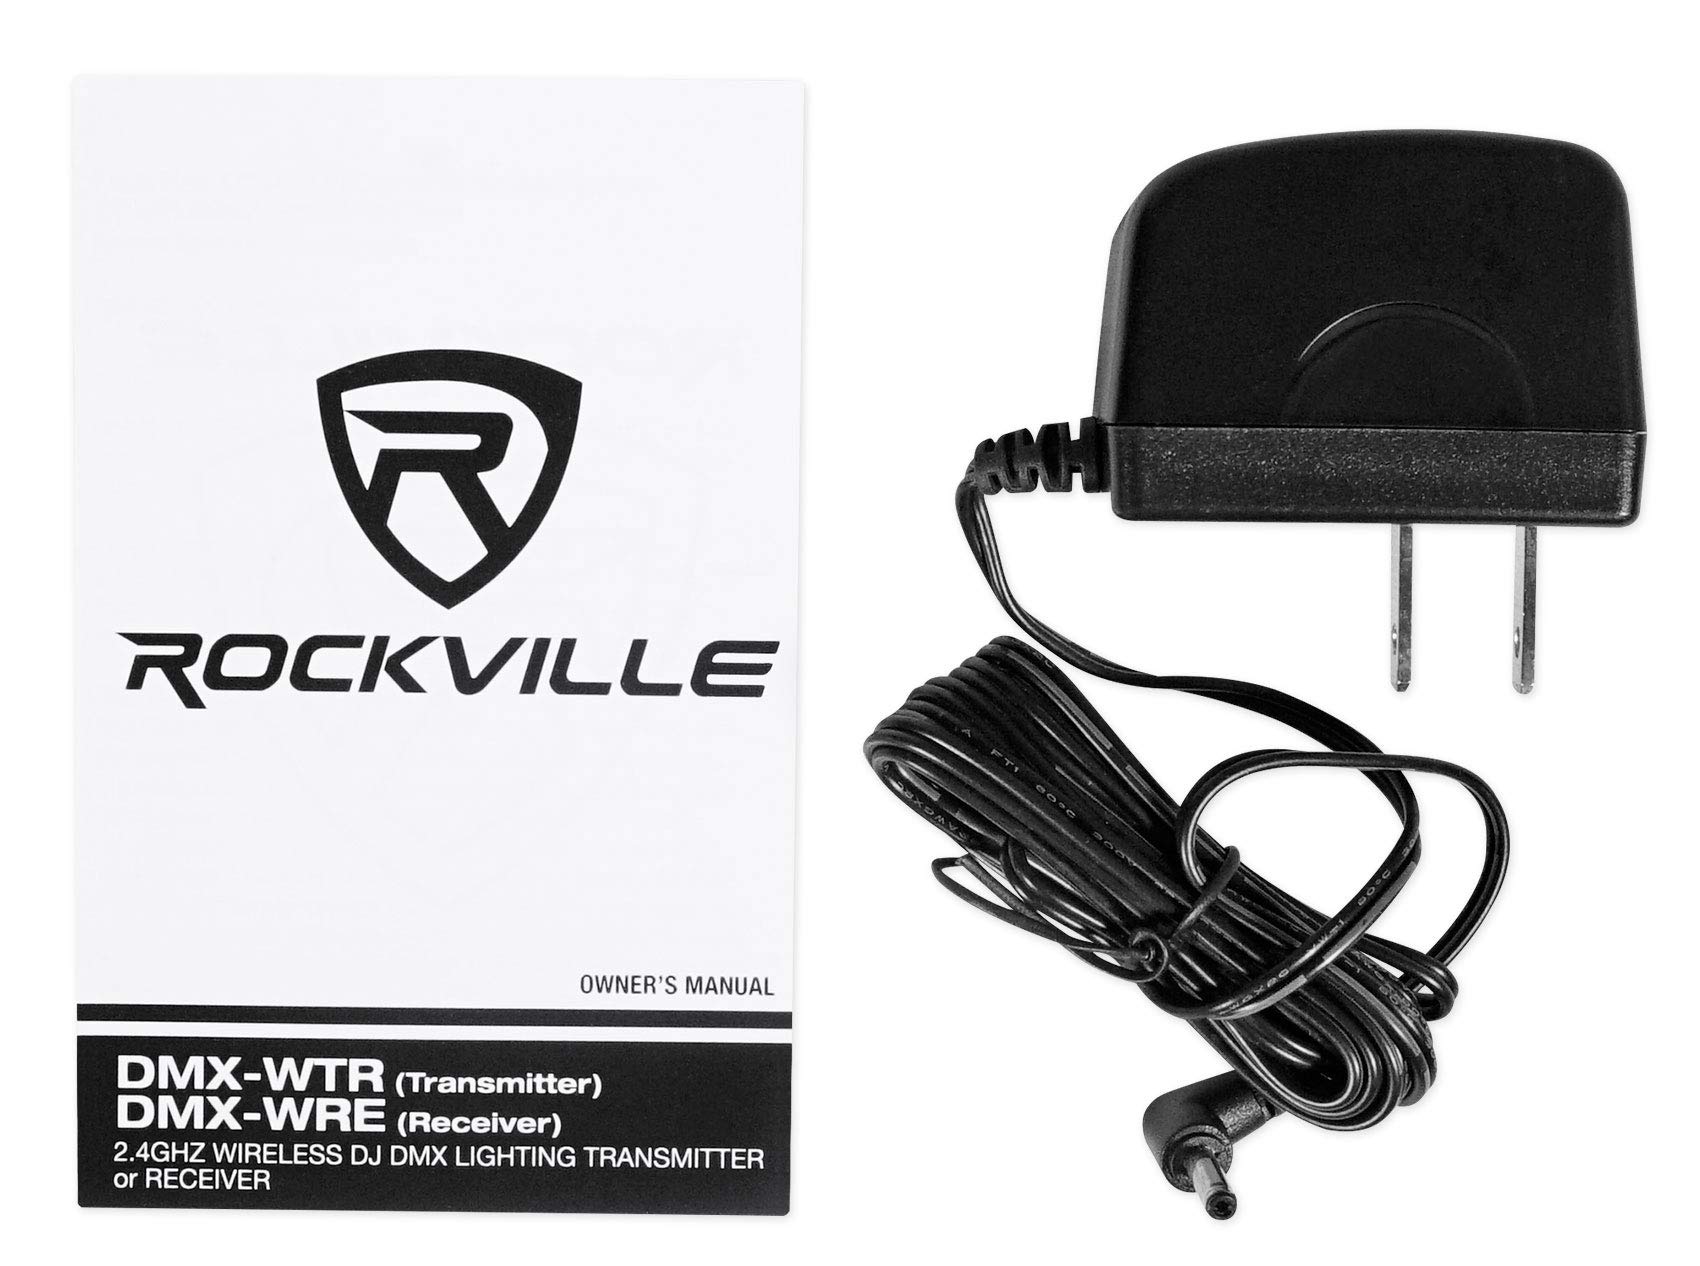 Rockville DMX-WTR Wireless DJ DMX Lighting Transmitter+8) Rechargeable Receivers